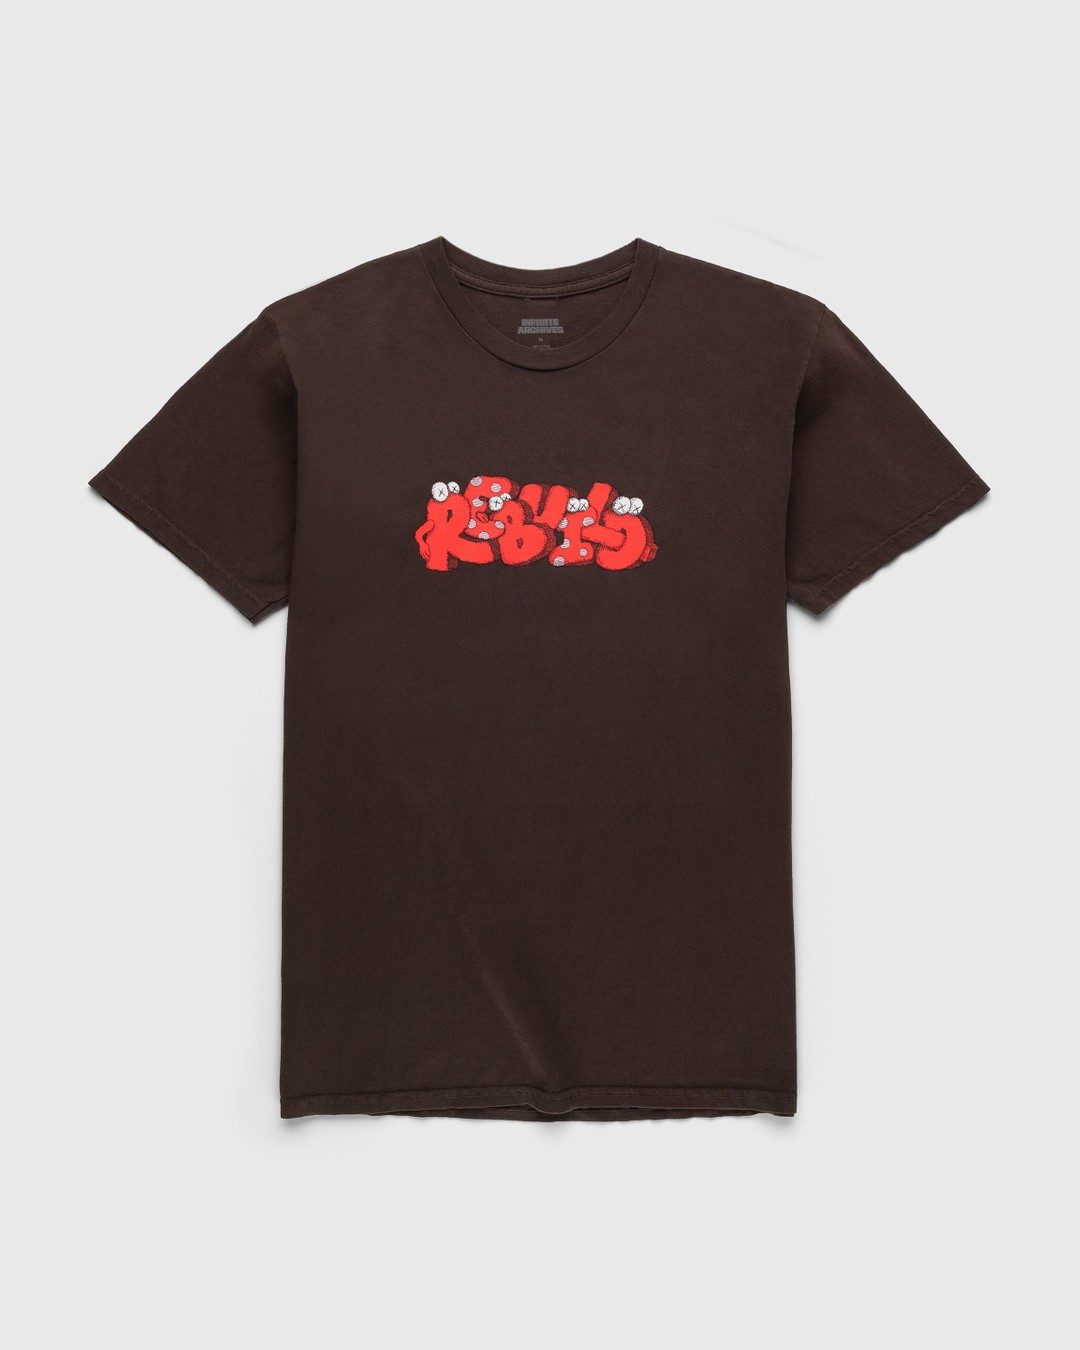 Infinite Archives x KAWS x Rebuild Foundation – Rebuild T-Shirt Brown - Tops - Brown - Image 1